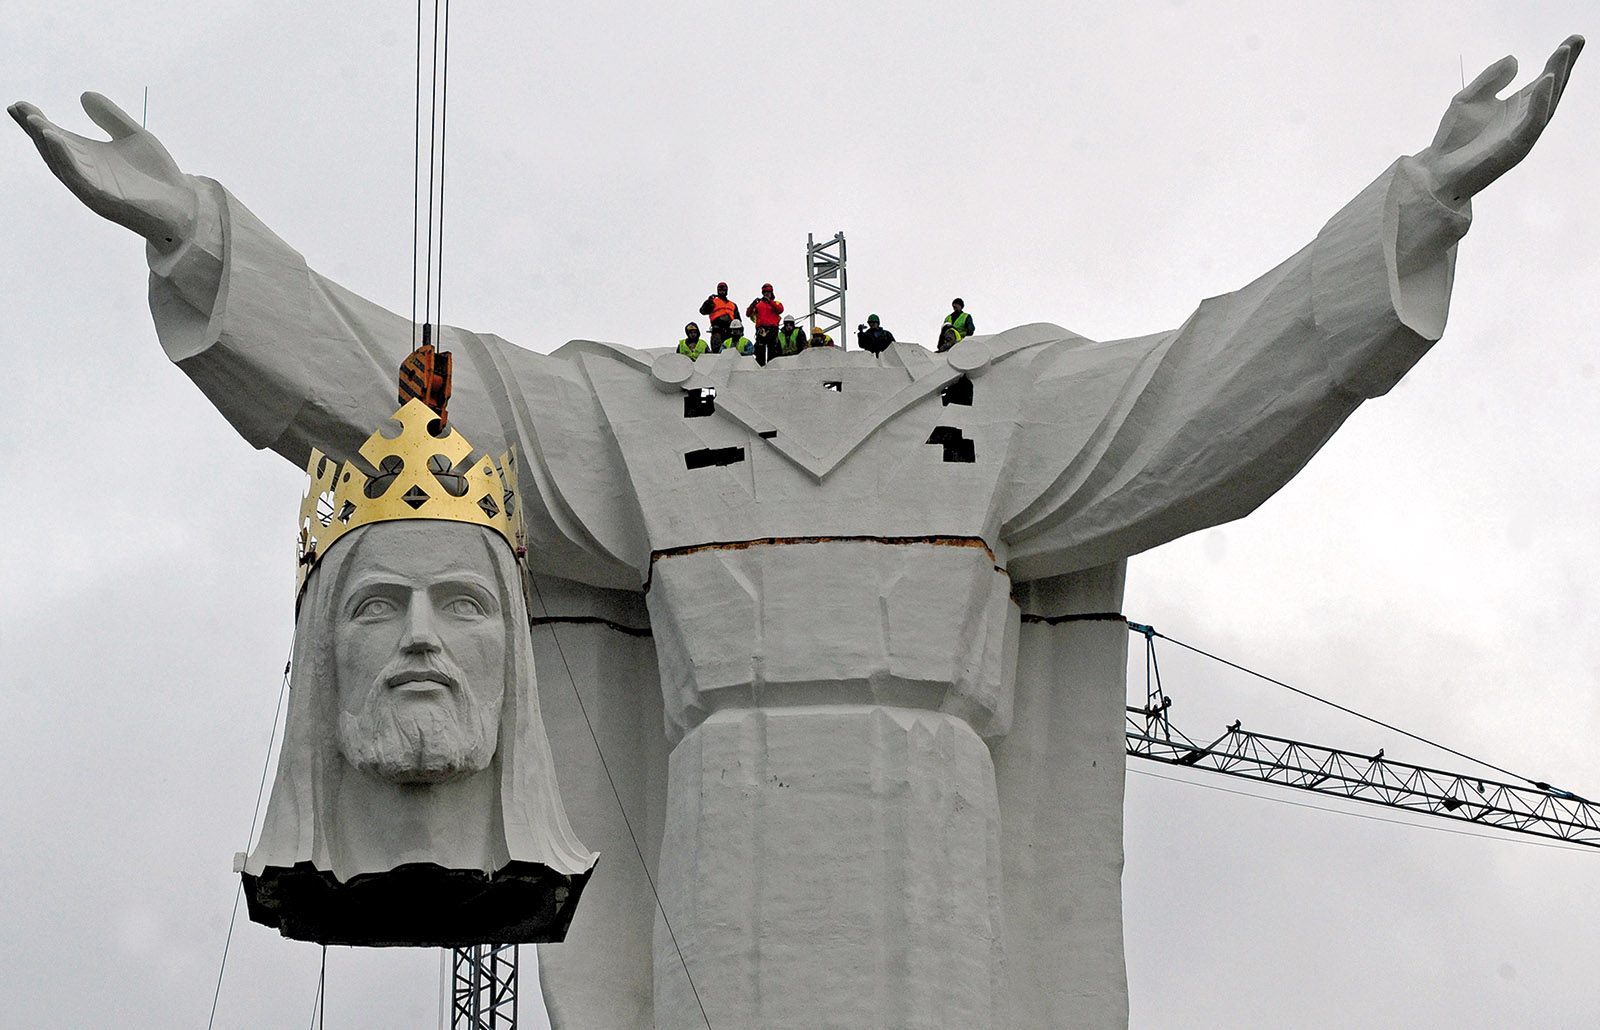 The construction of the world’s largest statue of Jesus Christ, Świebodzin, Poland, November 2010